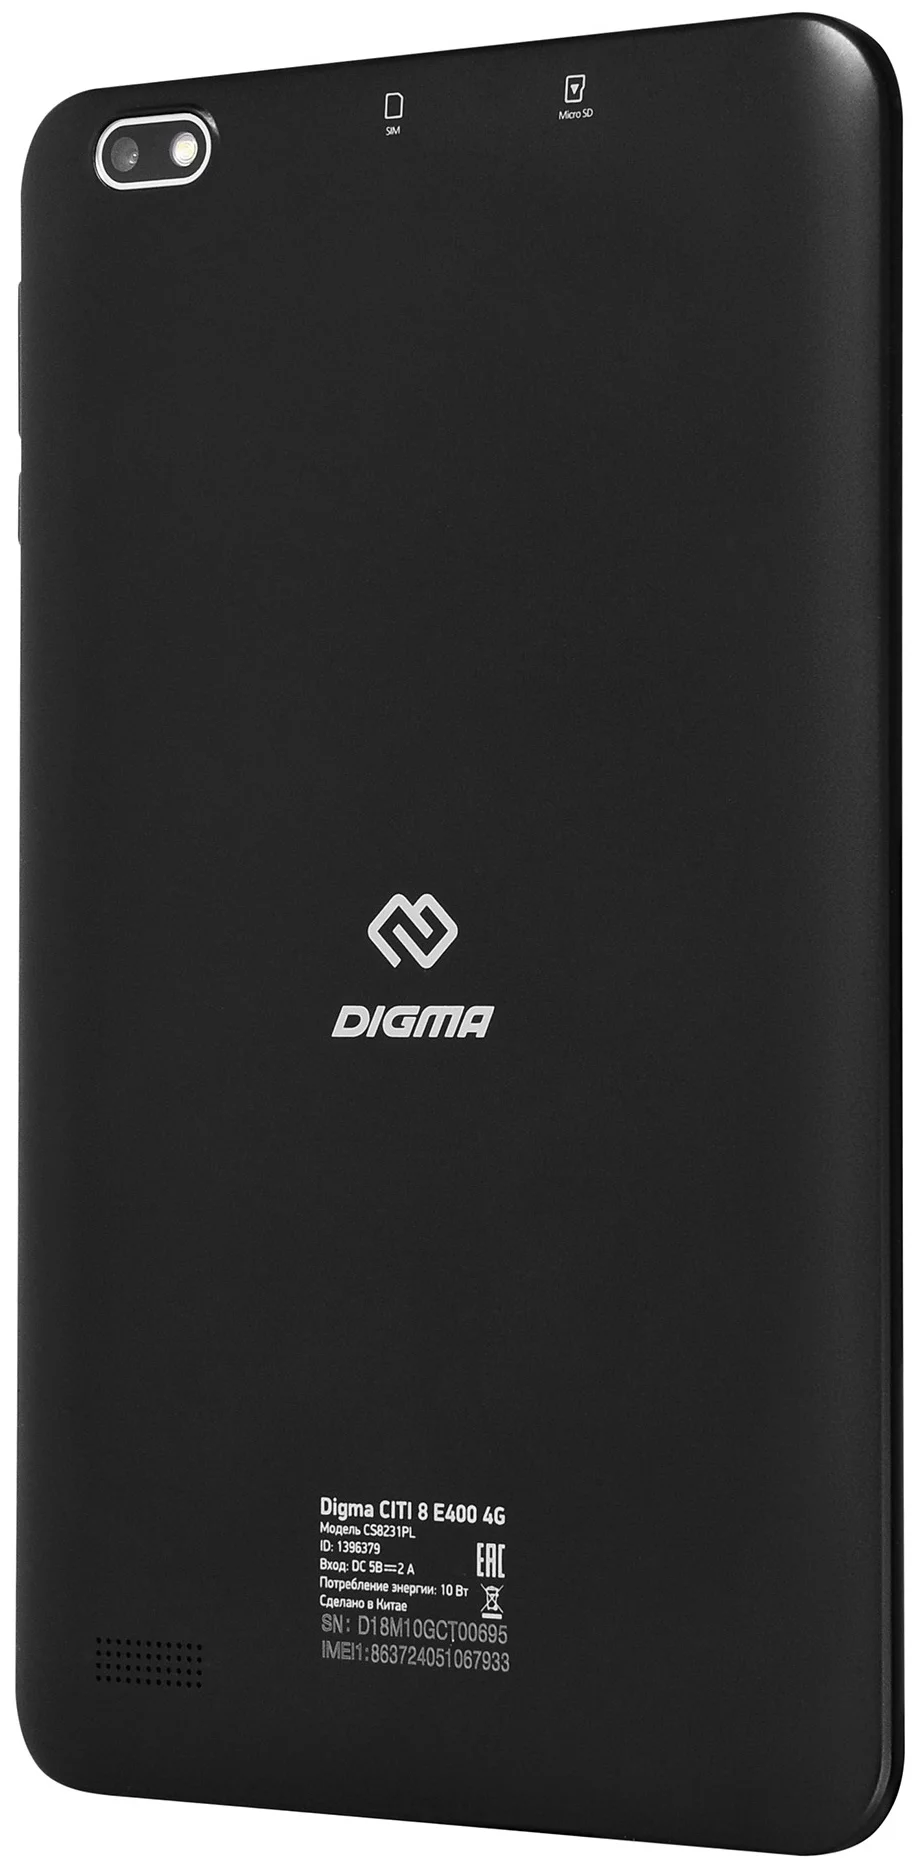 DIGMA CITI 8 E400 4G - камеры: основная 2 МП, фронтальная 0.30 МП